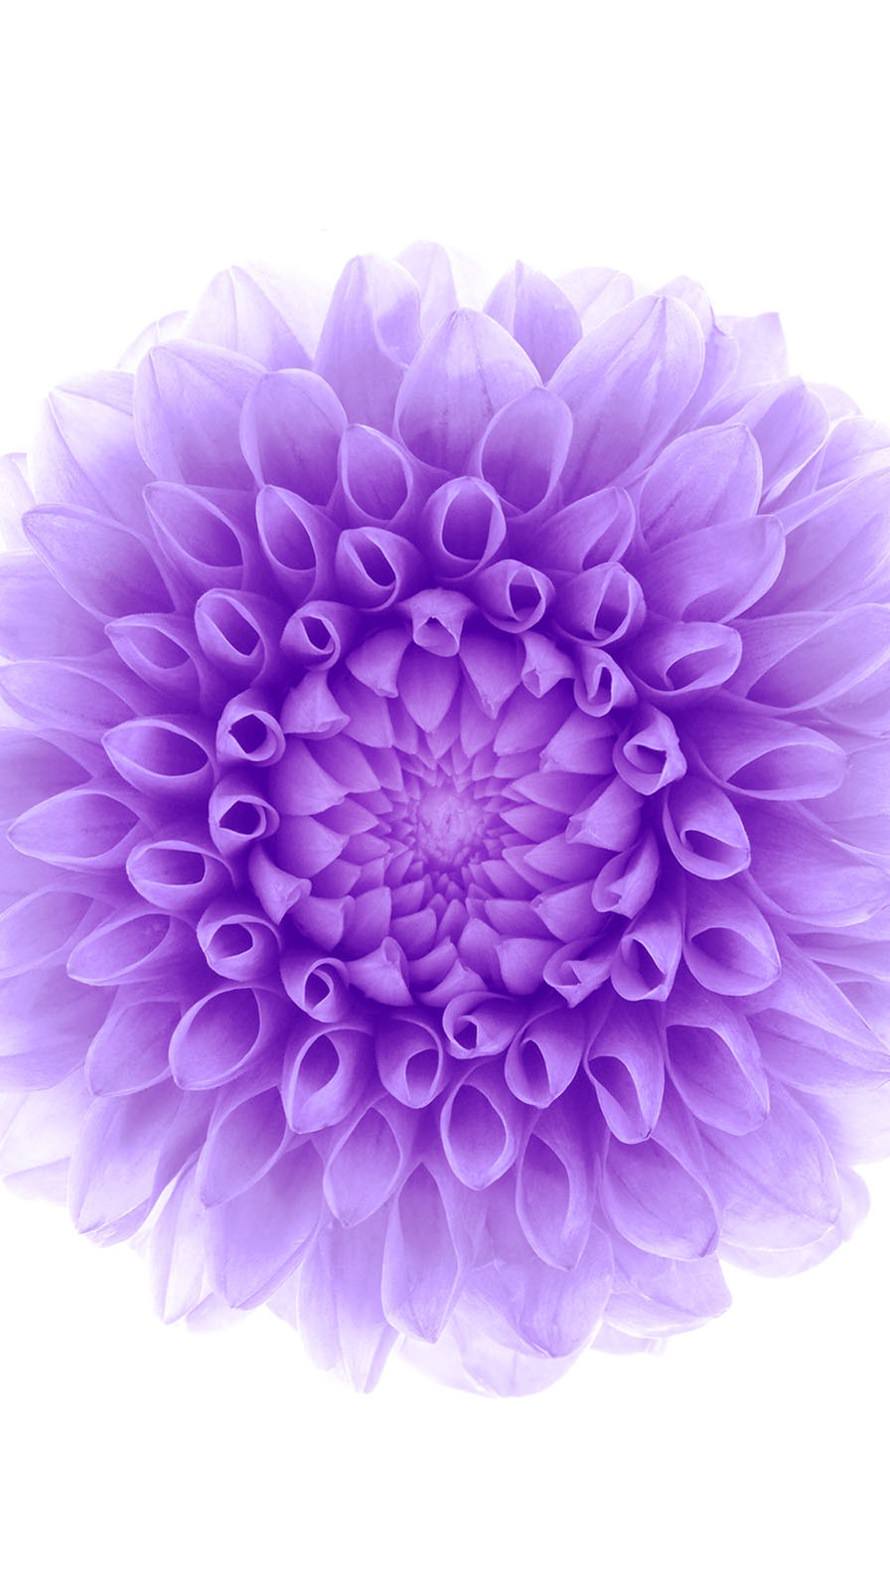 Flower Purple White Shelf Wallpaper Sc Iphone6s